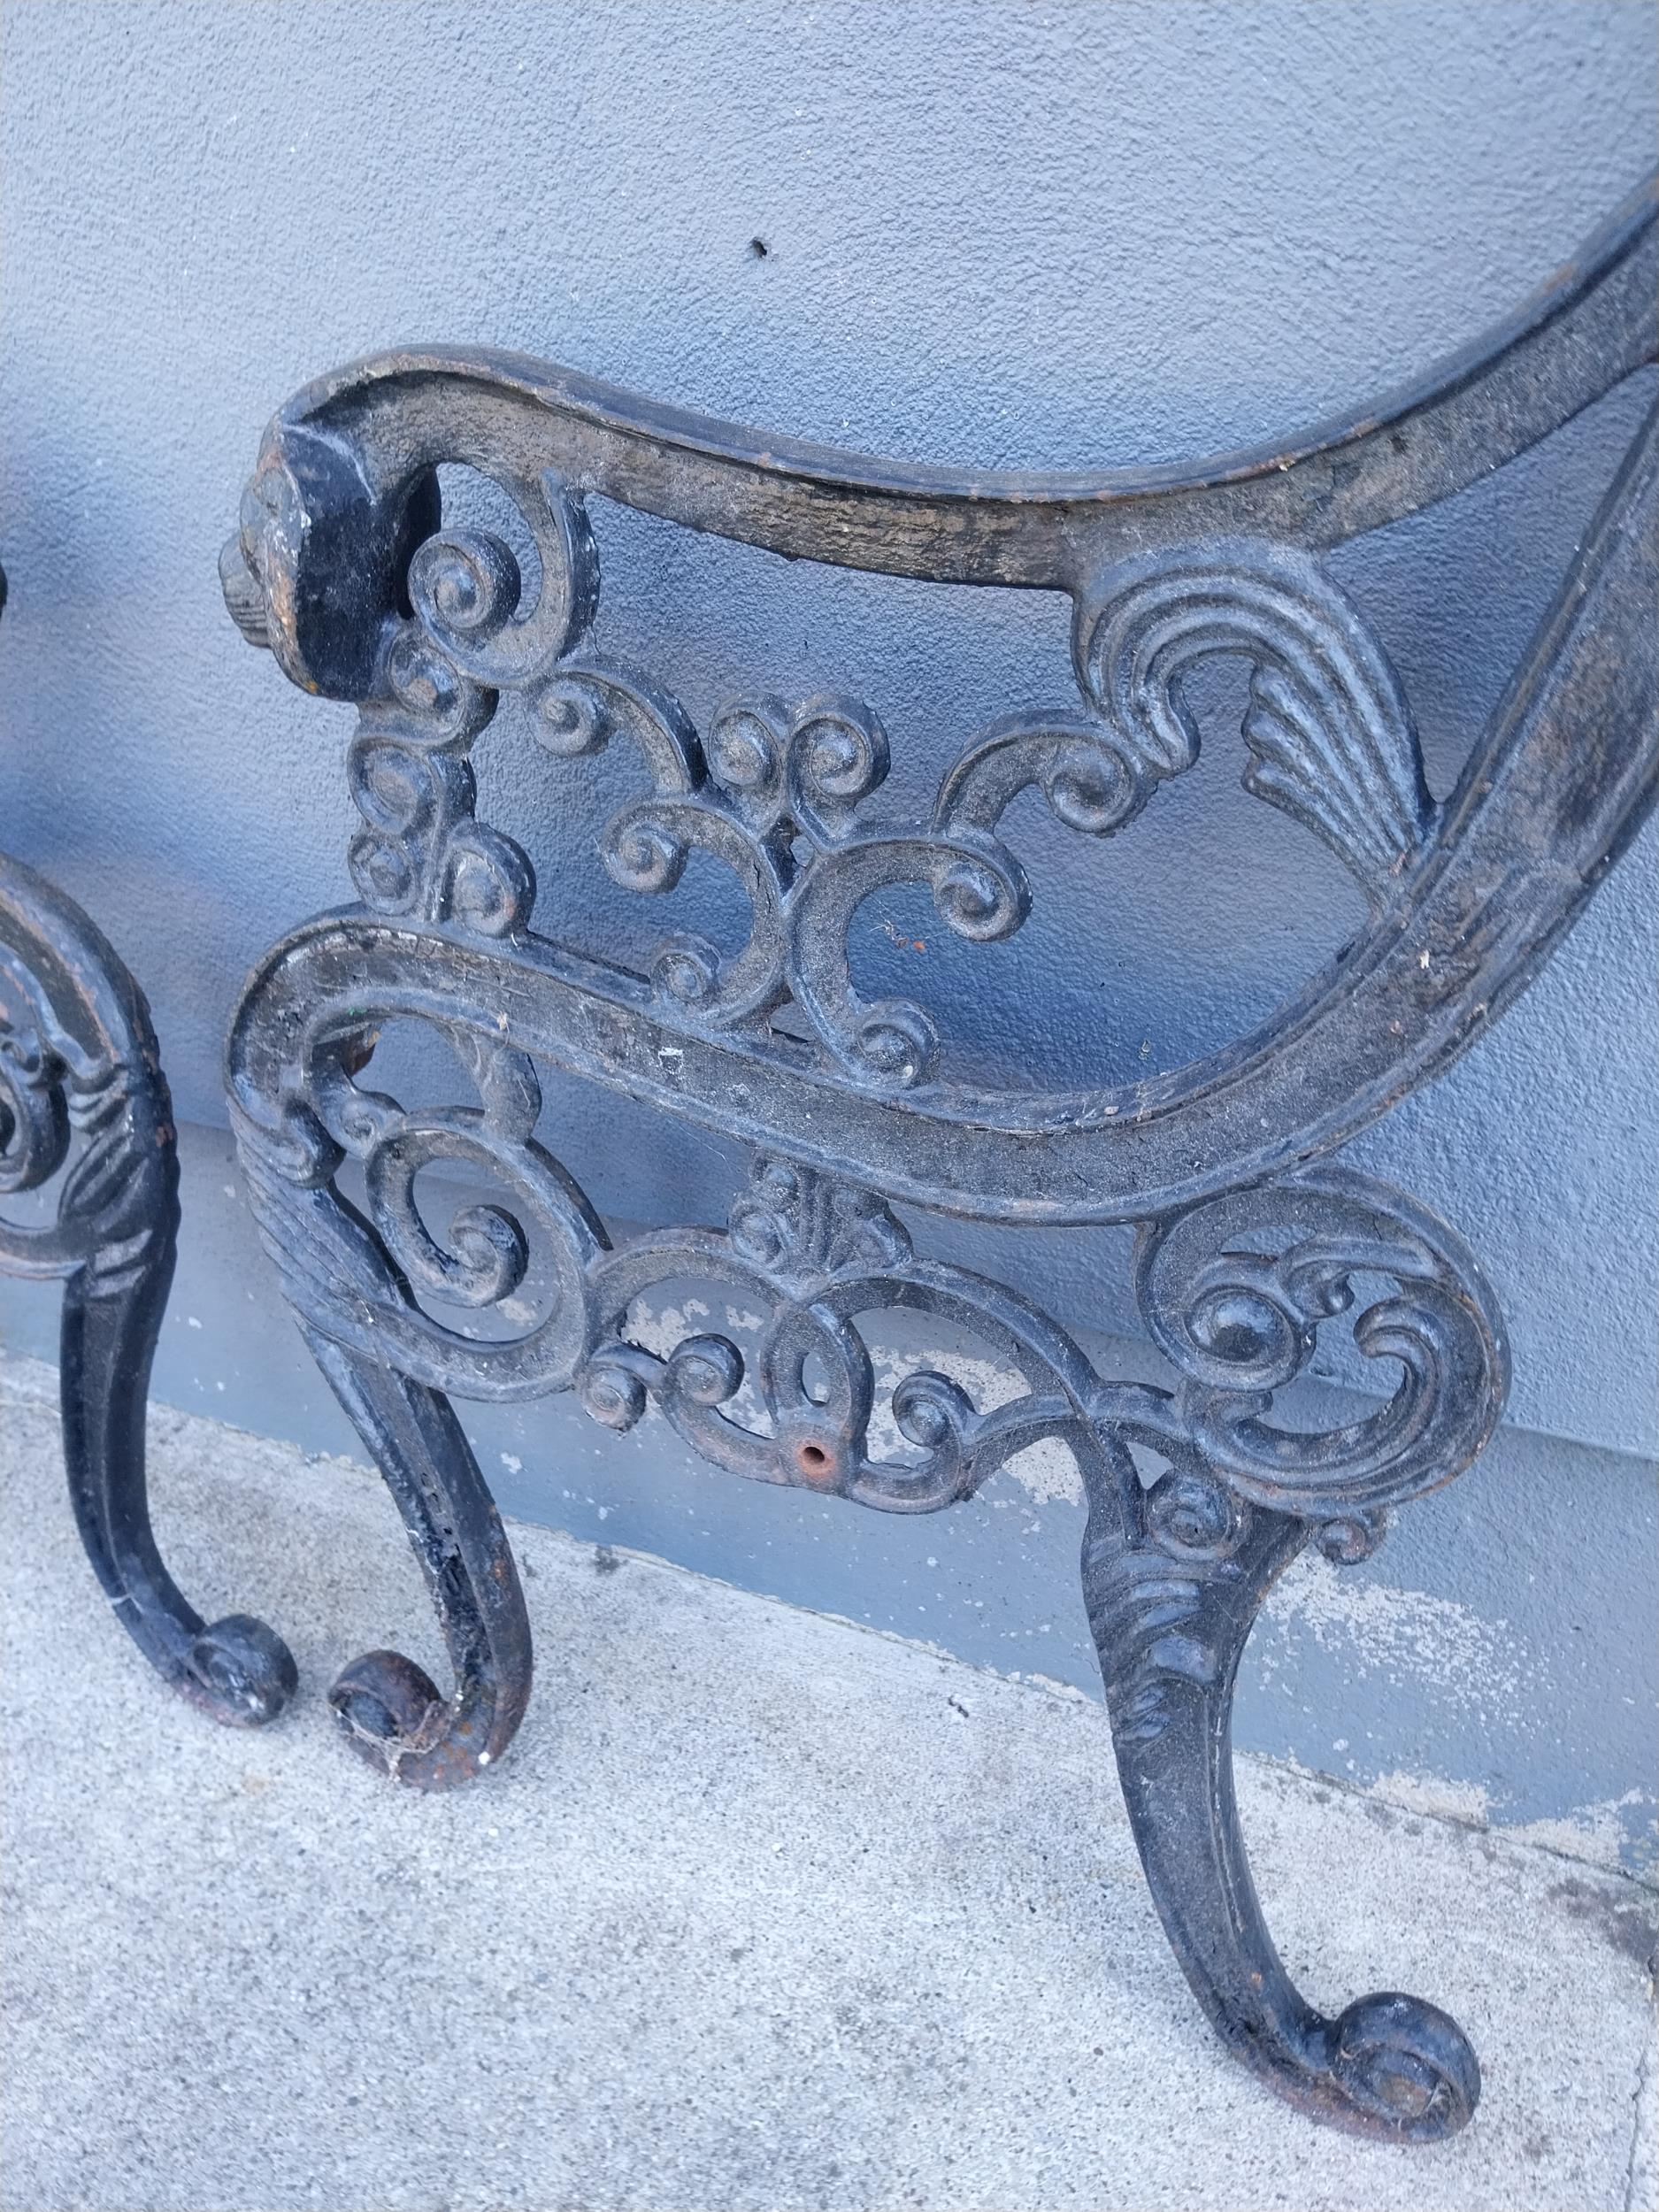 Pair of decorative cast iron seat ends {74 cm H x 66 cm W}. - Image 2 of 3